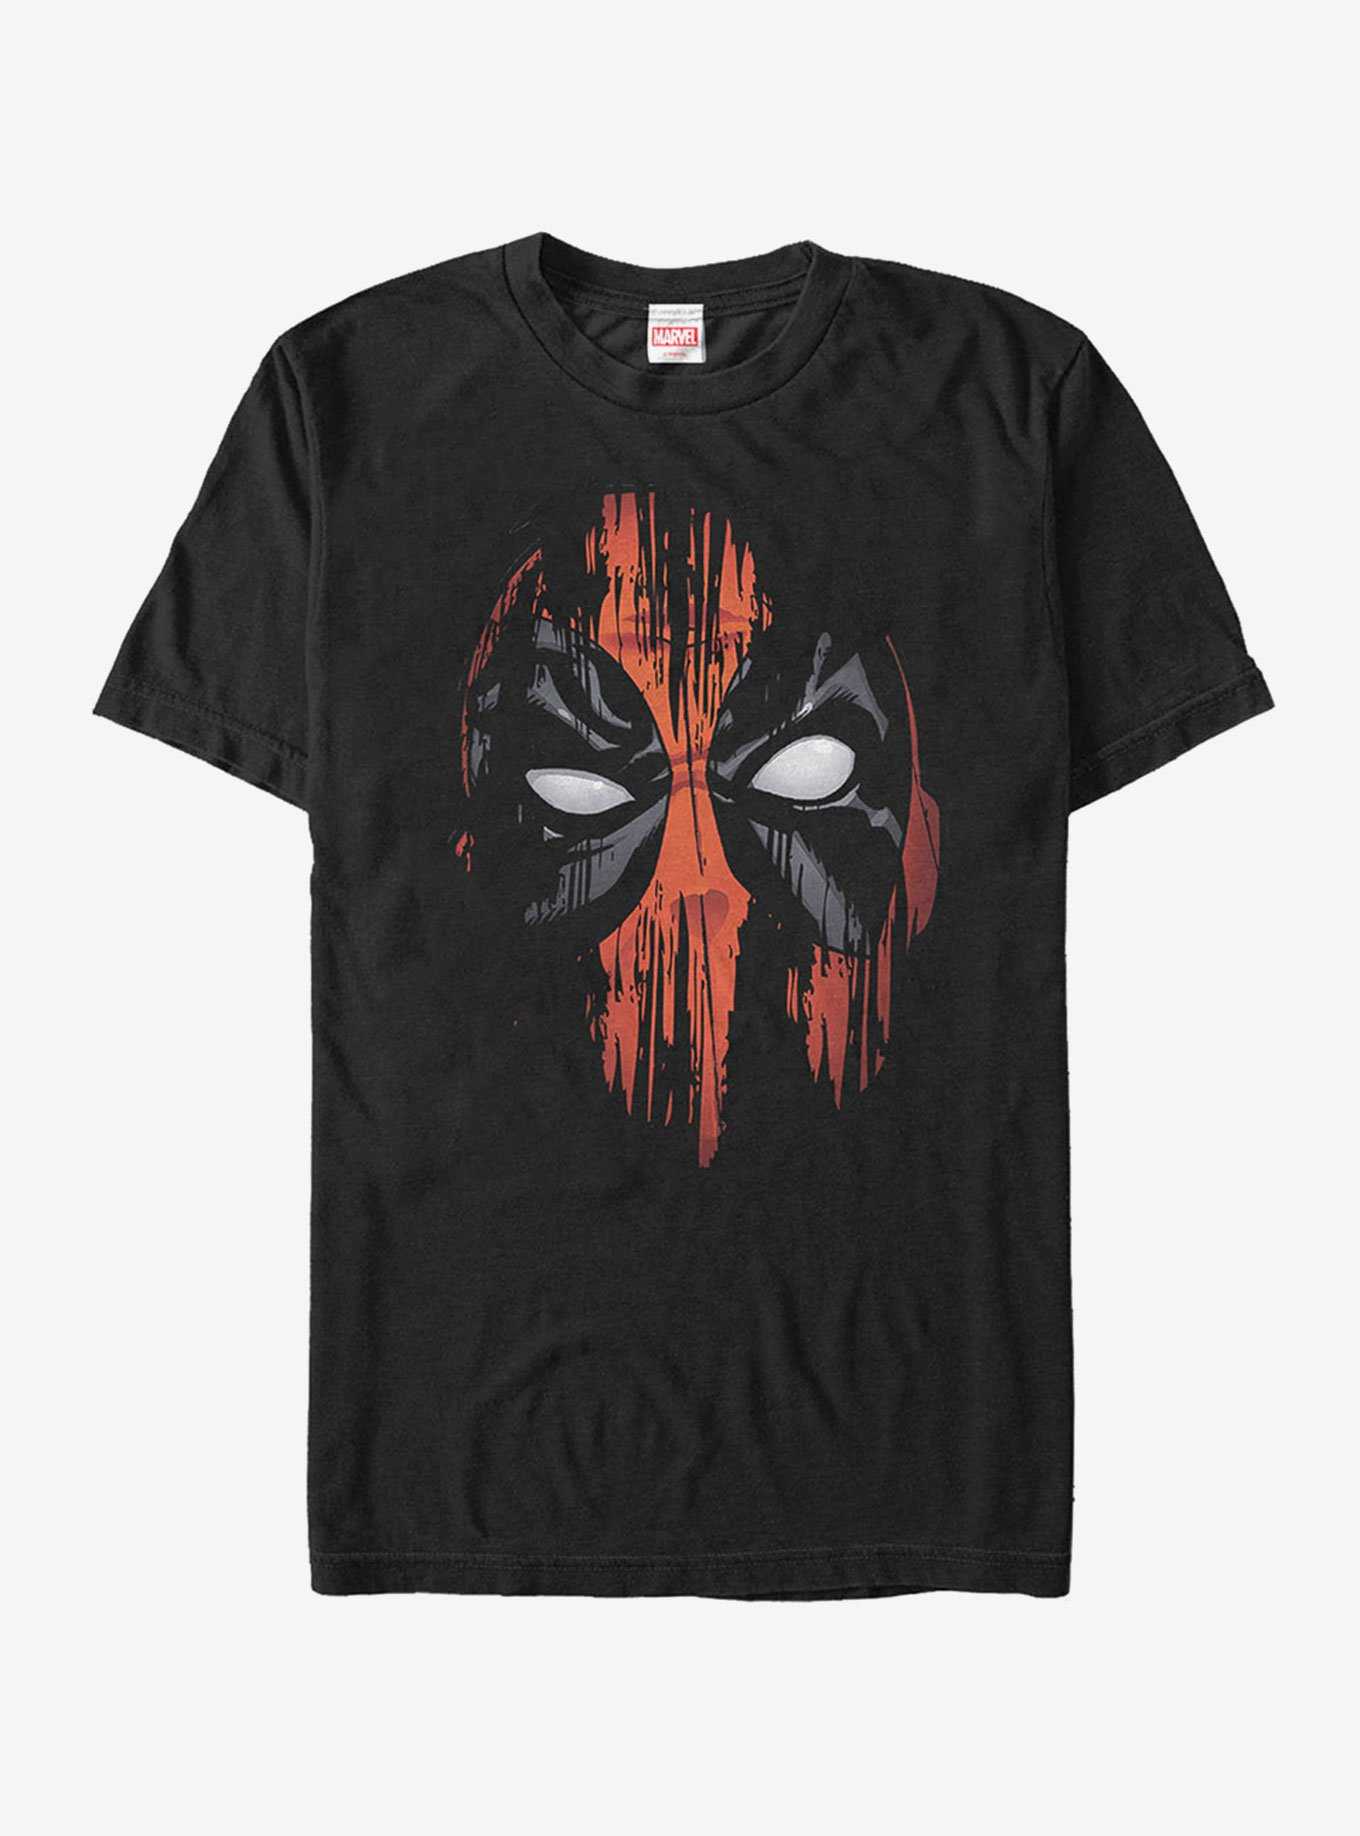 Marvel Deadpool Streak Mask T-Shirt, , hi-res